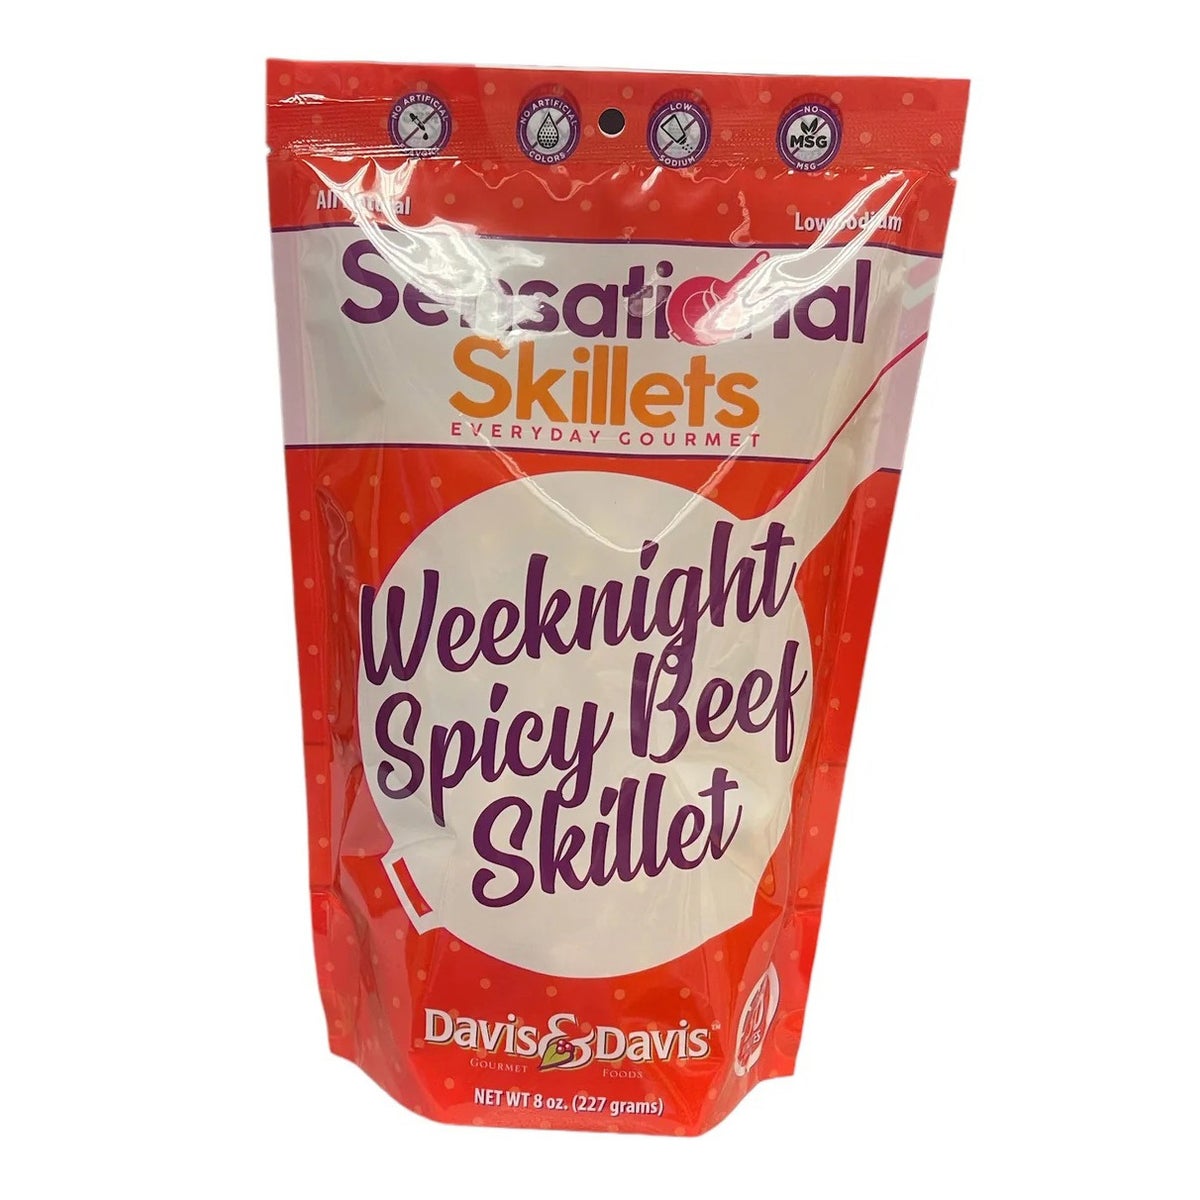 Sensational Skillets - Spicy Beef